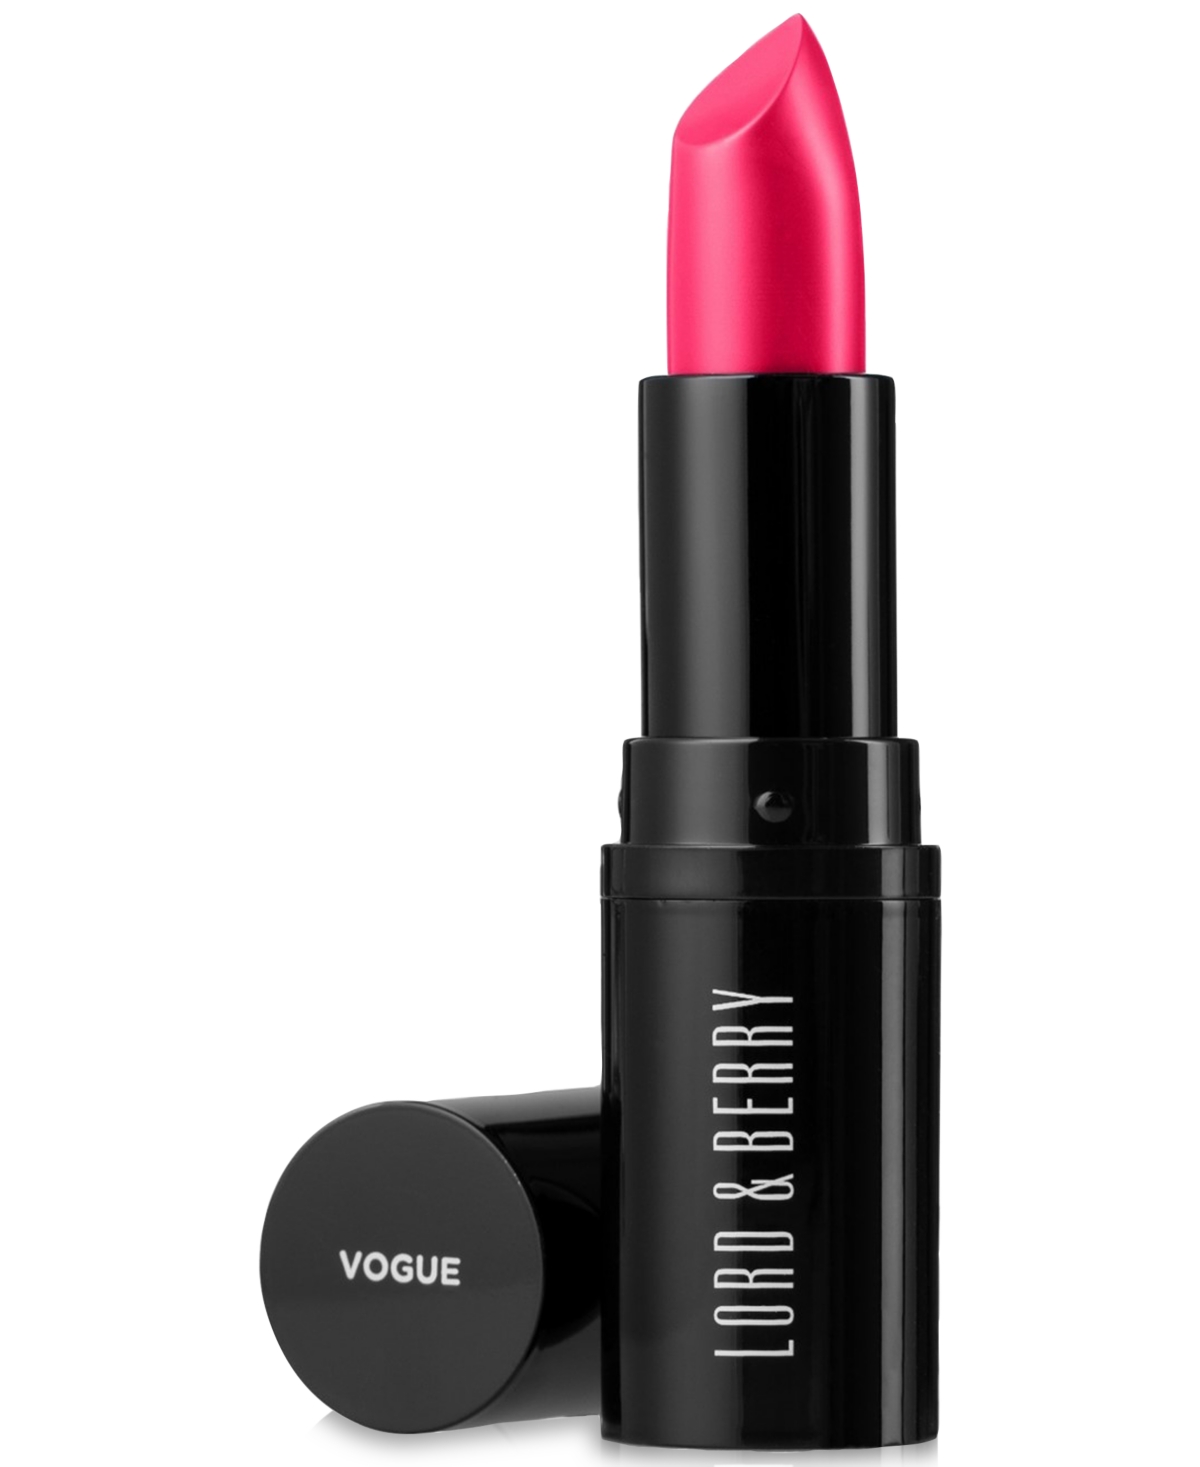 Vogue Matte Lipstick - Passionate- dark brown nude